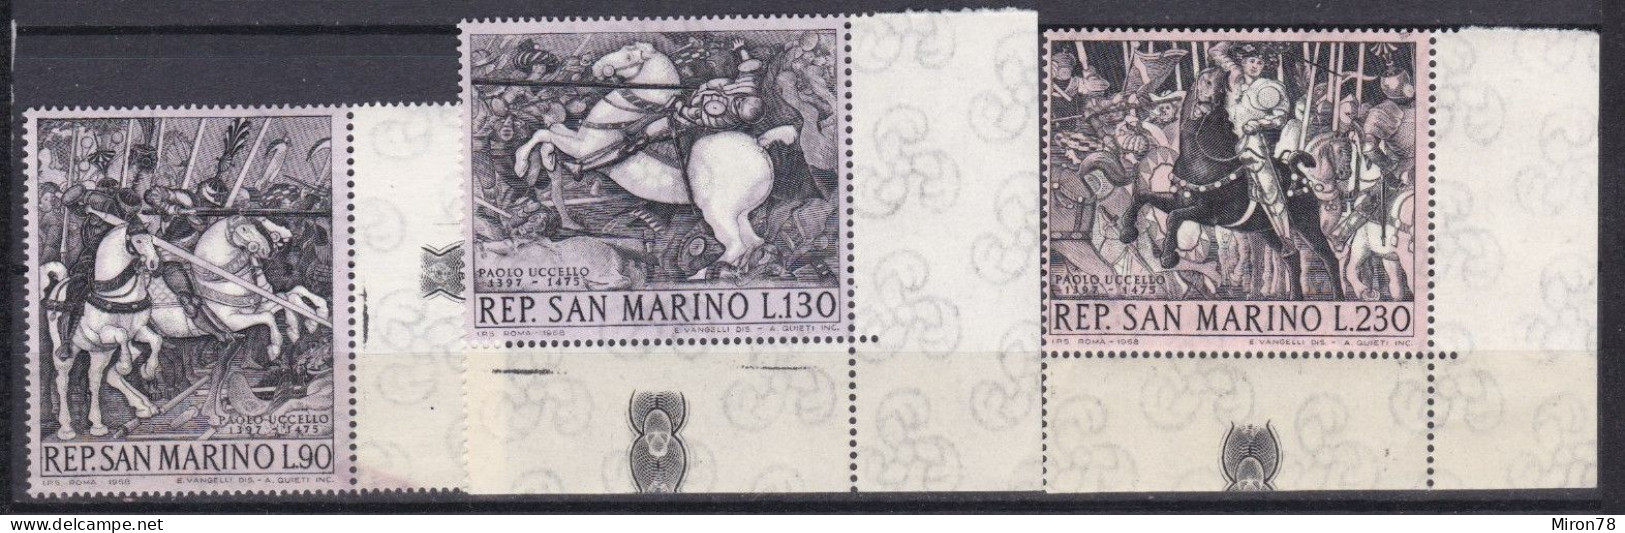 Stamps SAN MARINO MNH Lot55 - Unused Stamps